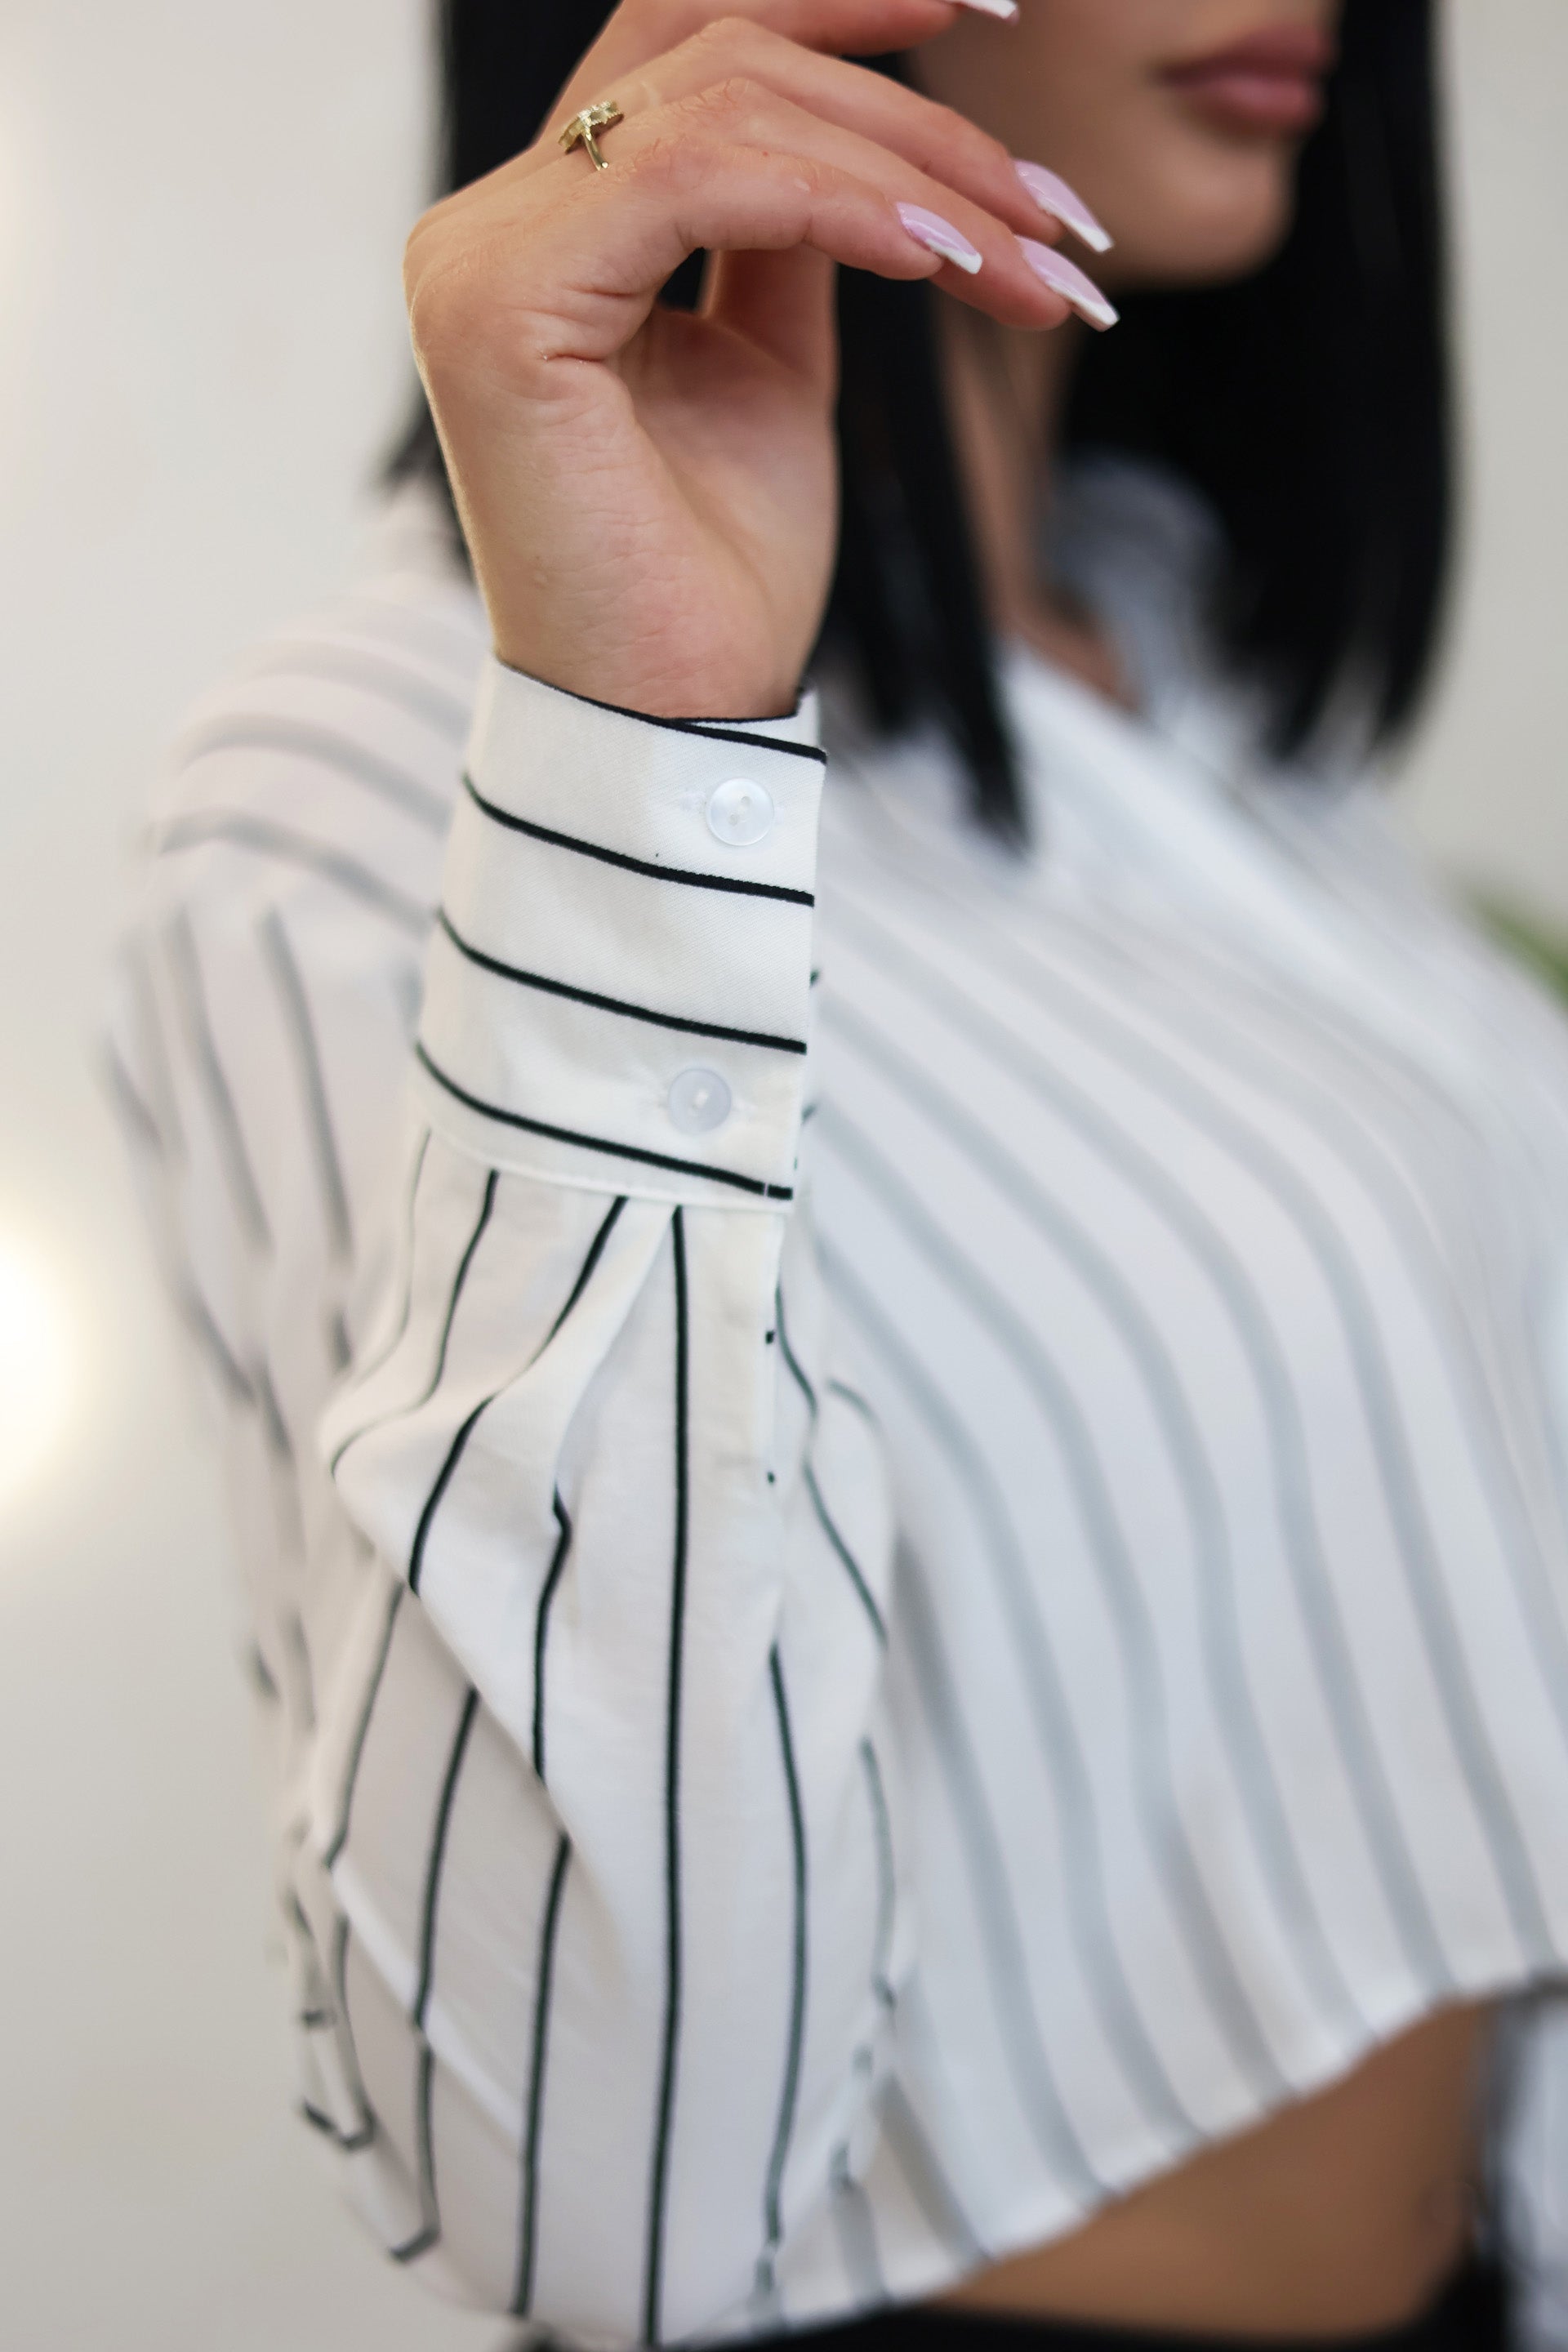 Cropped striped shirt